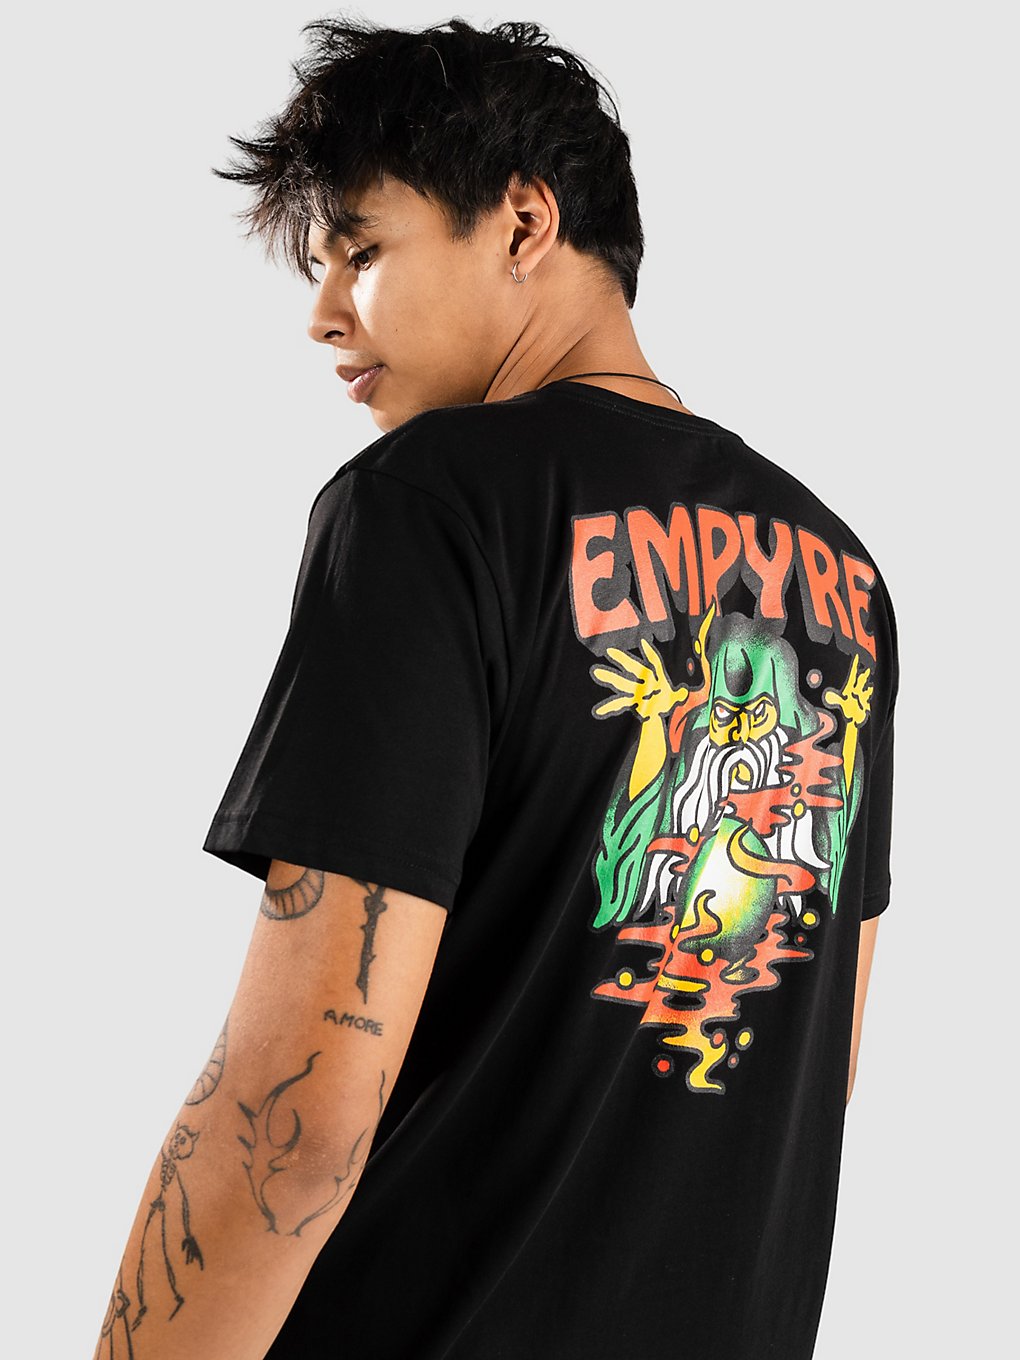 Empyre Magic Man T-Shirt black kaufen